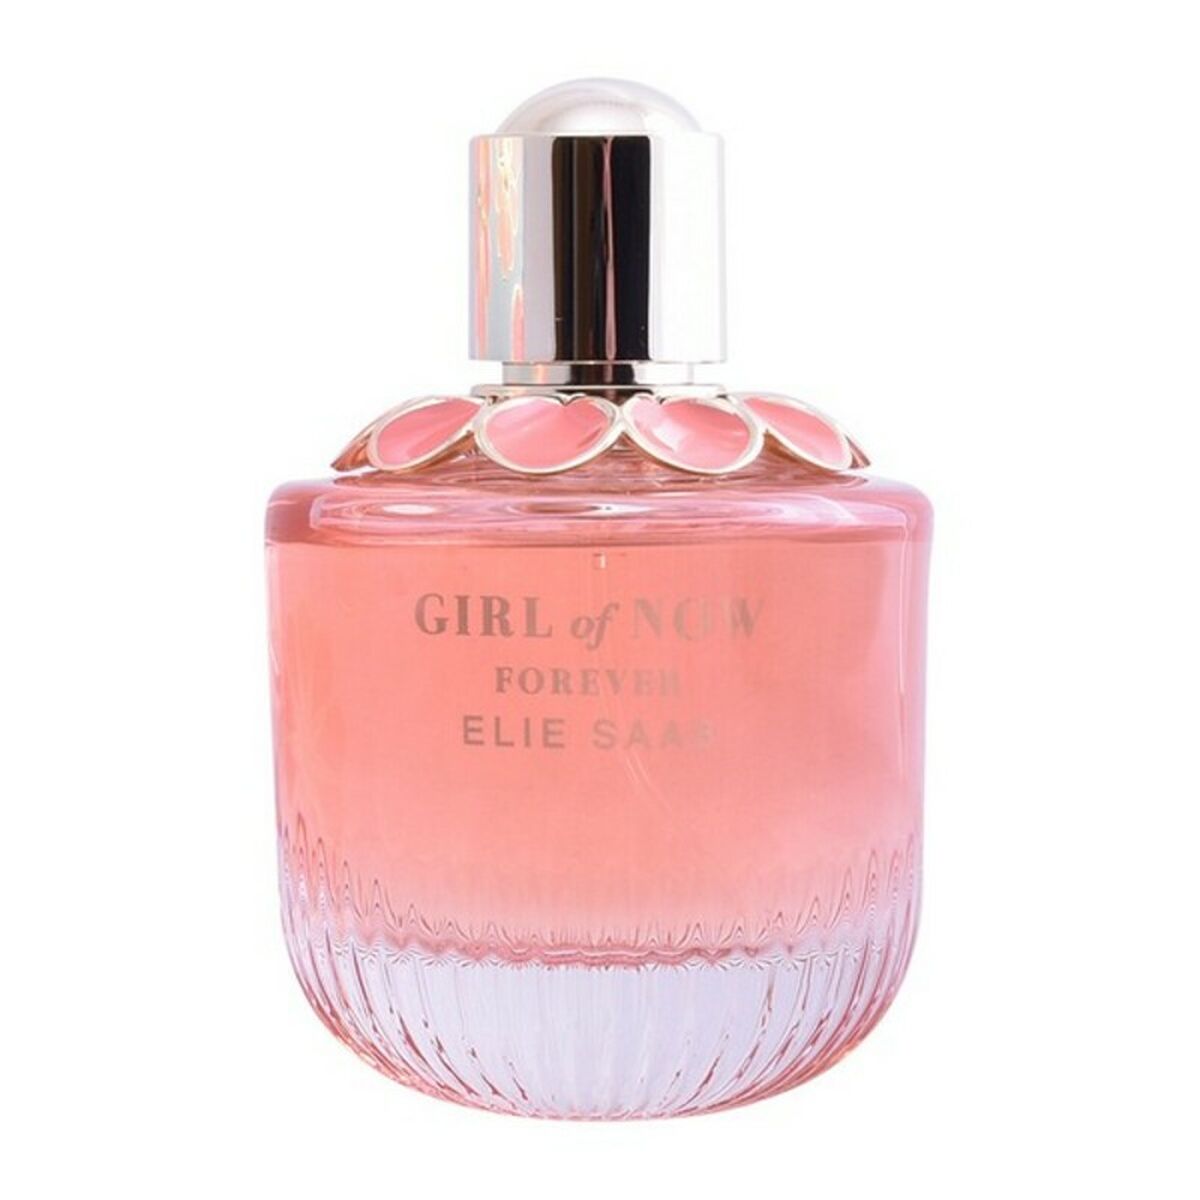 Dámský parfém Elie Saab Edp Girl of Now Forever (90 ml)